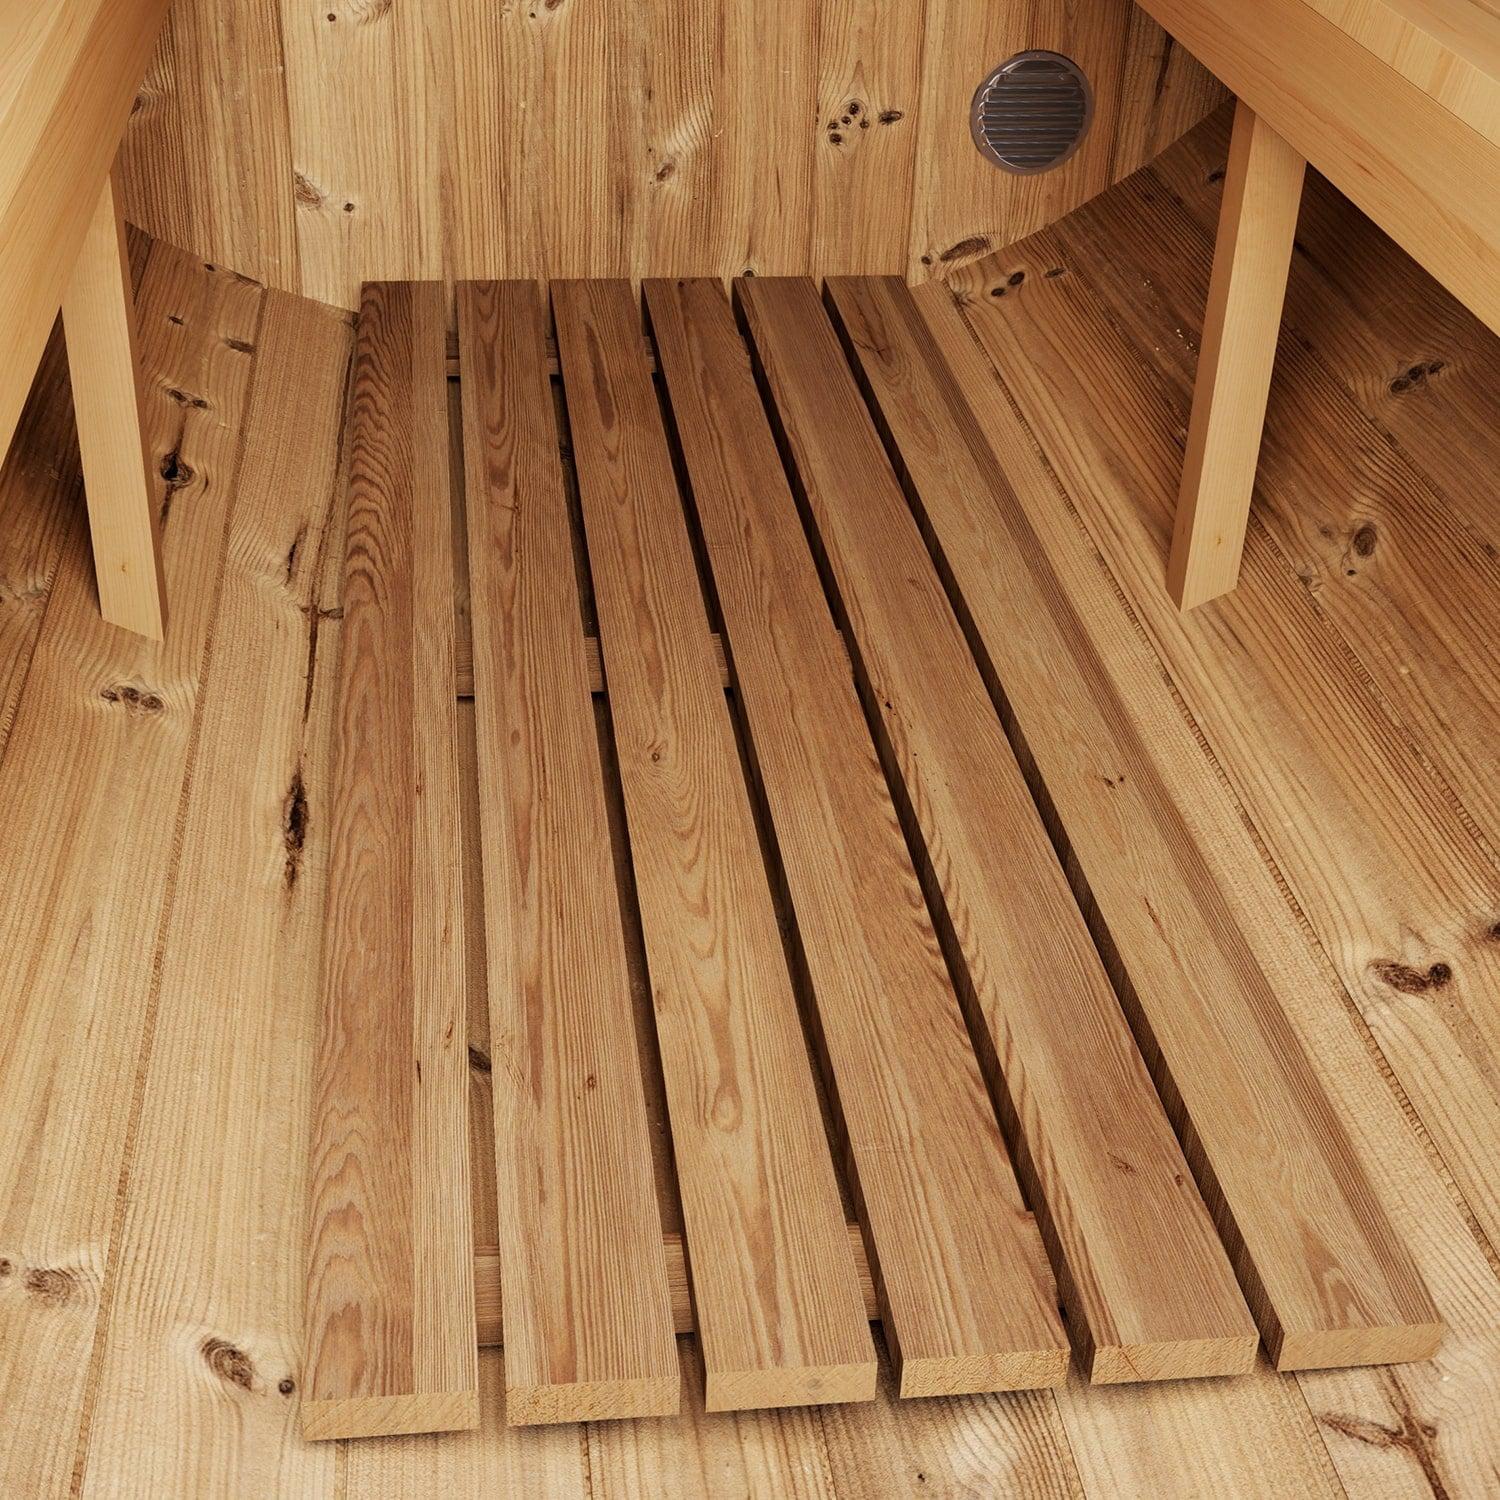 SaunaLife E7 Sauna Barrel Floor - Purely Relaxation